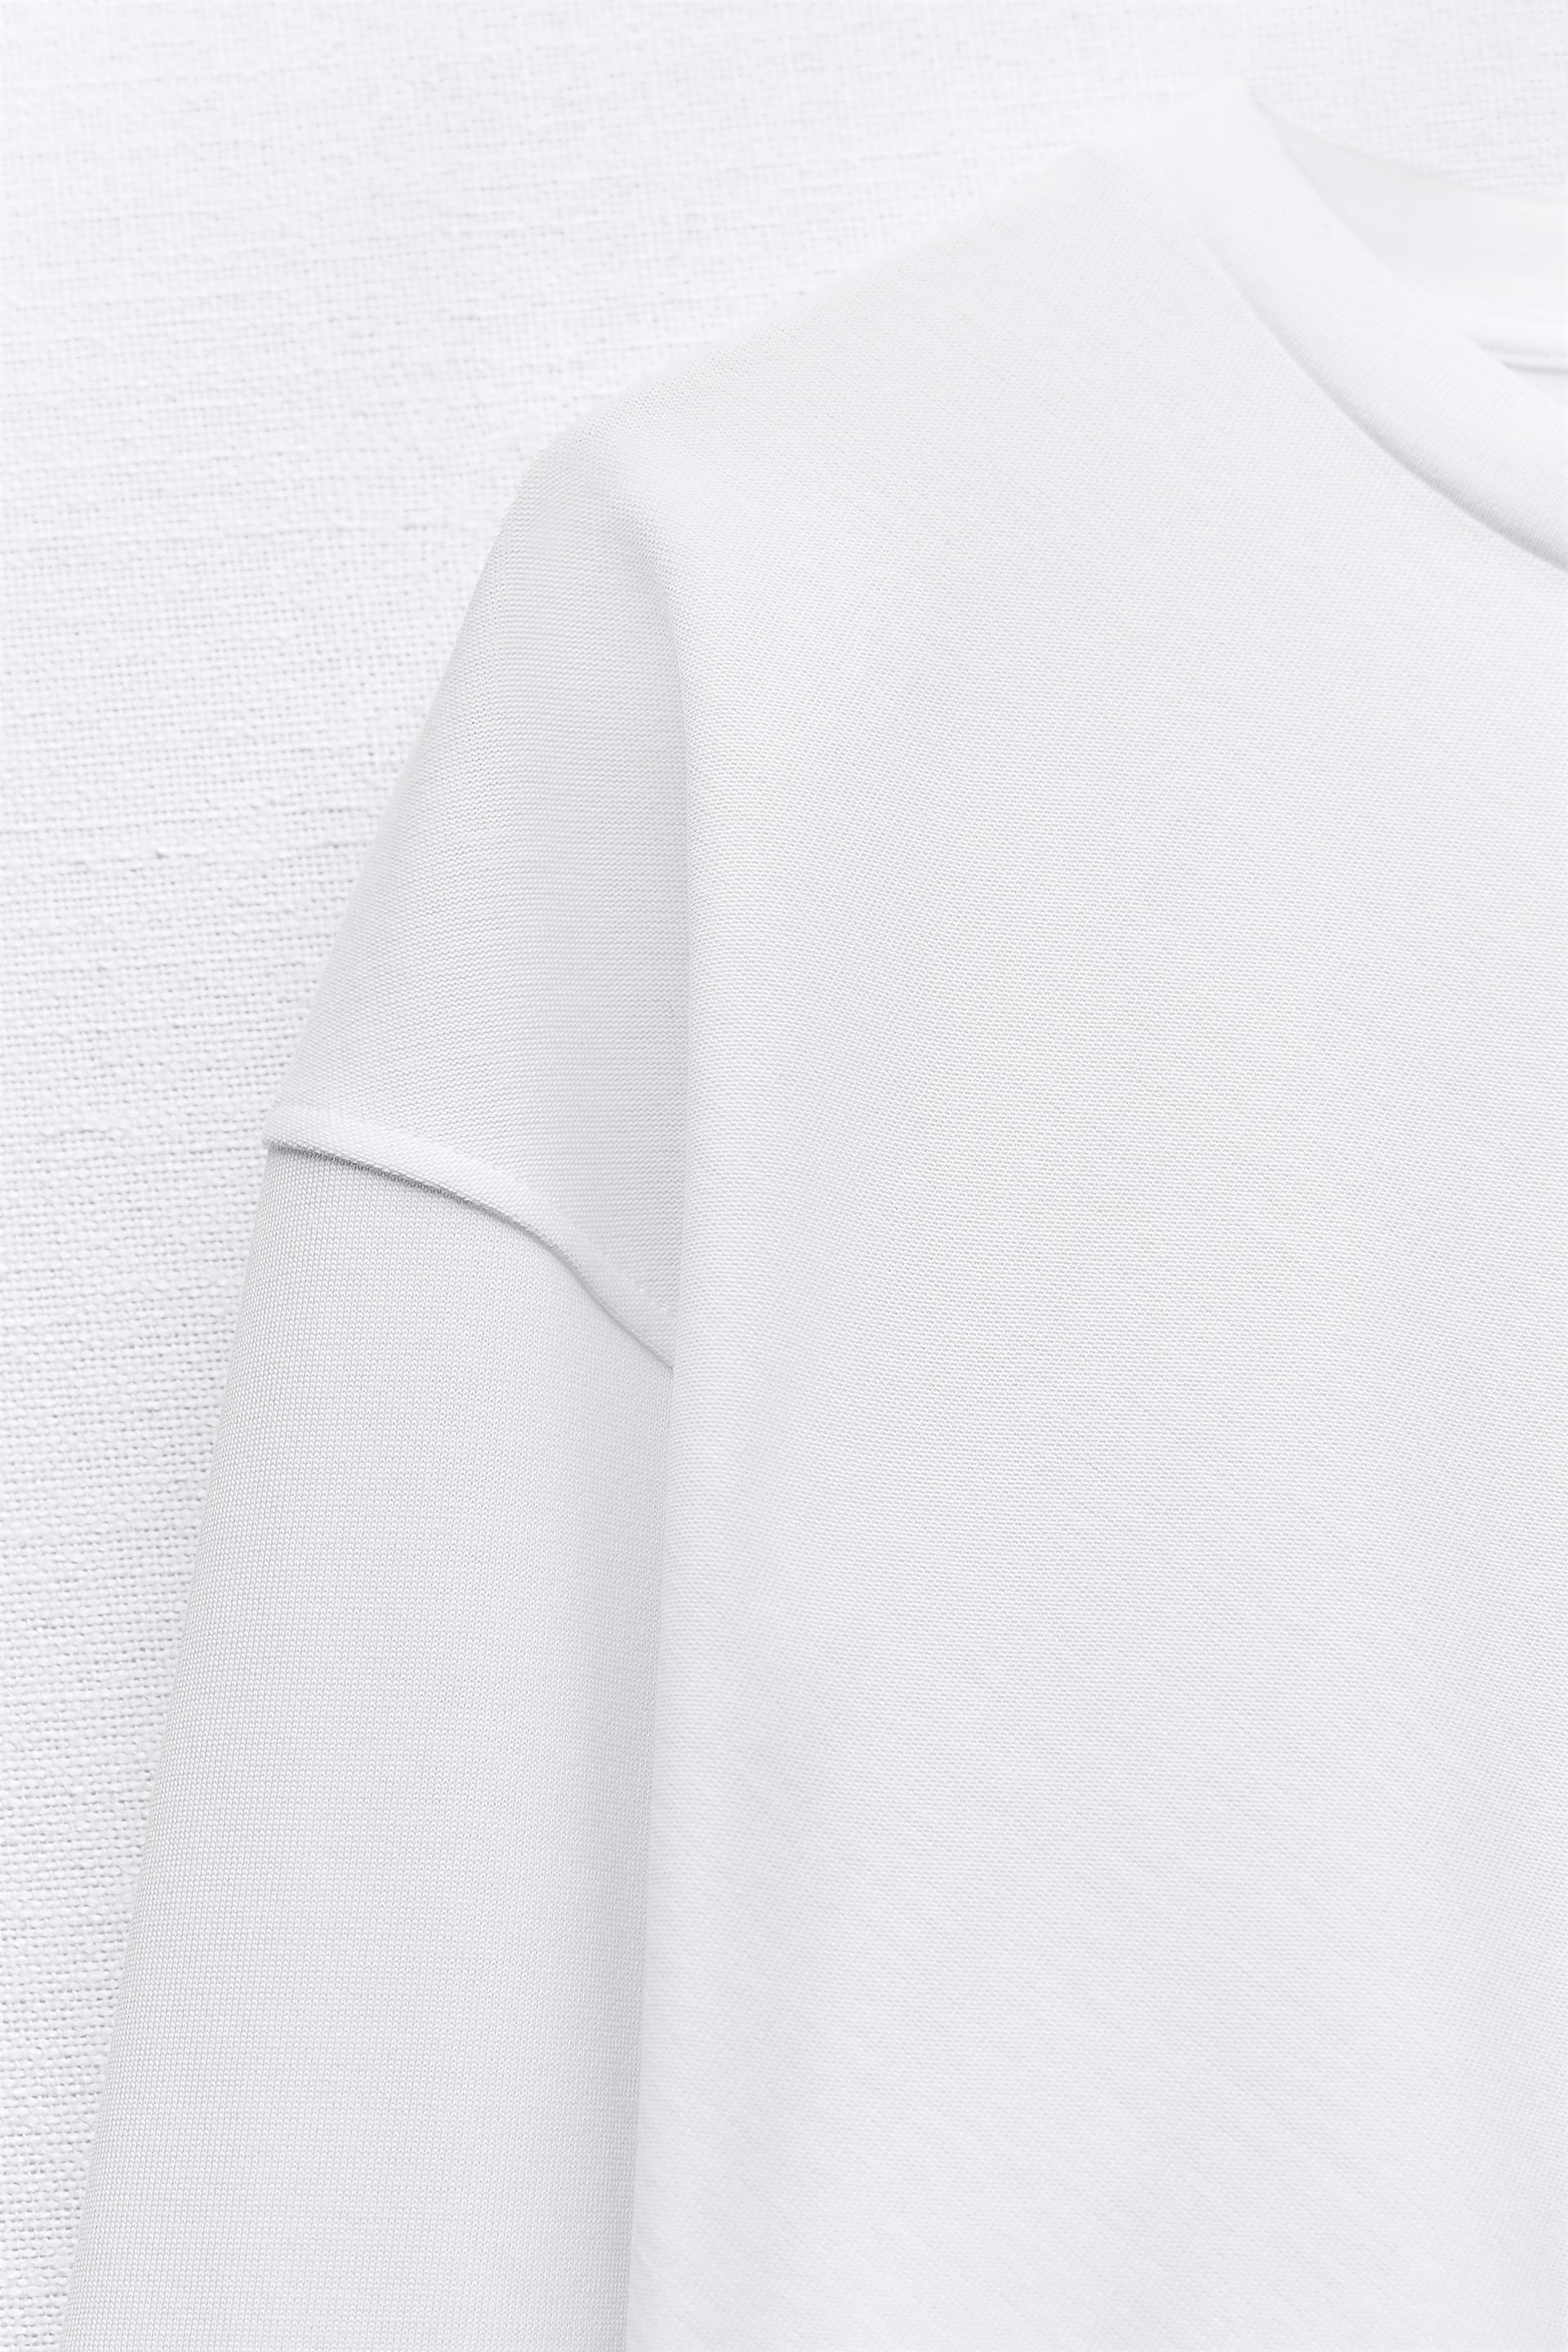 Zara asymmetric white shirt with black corset lace-up belt Size XS